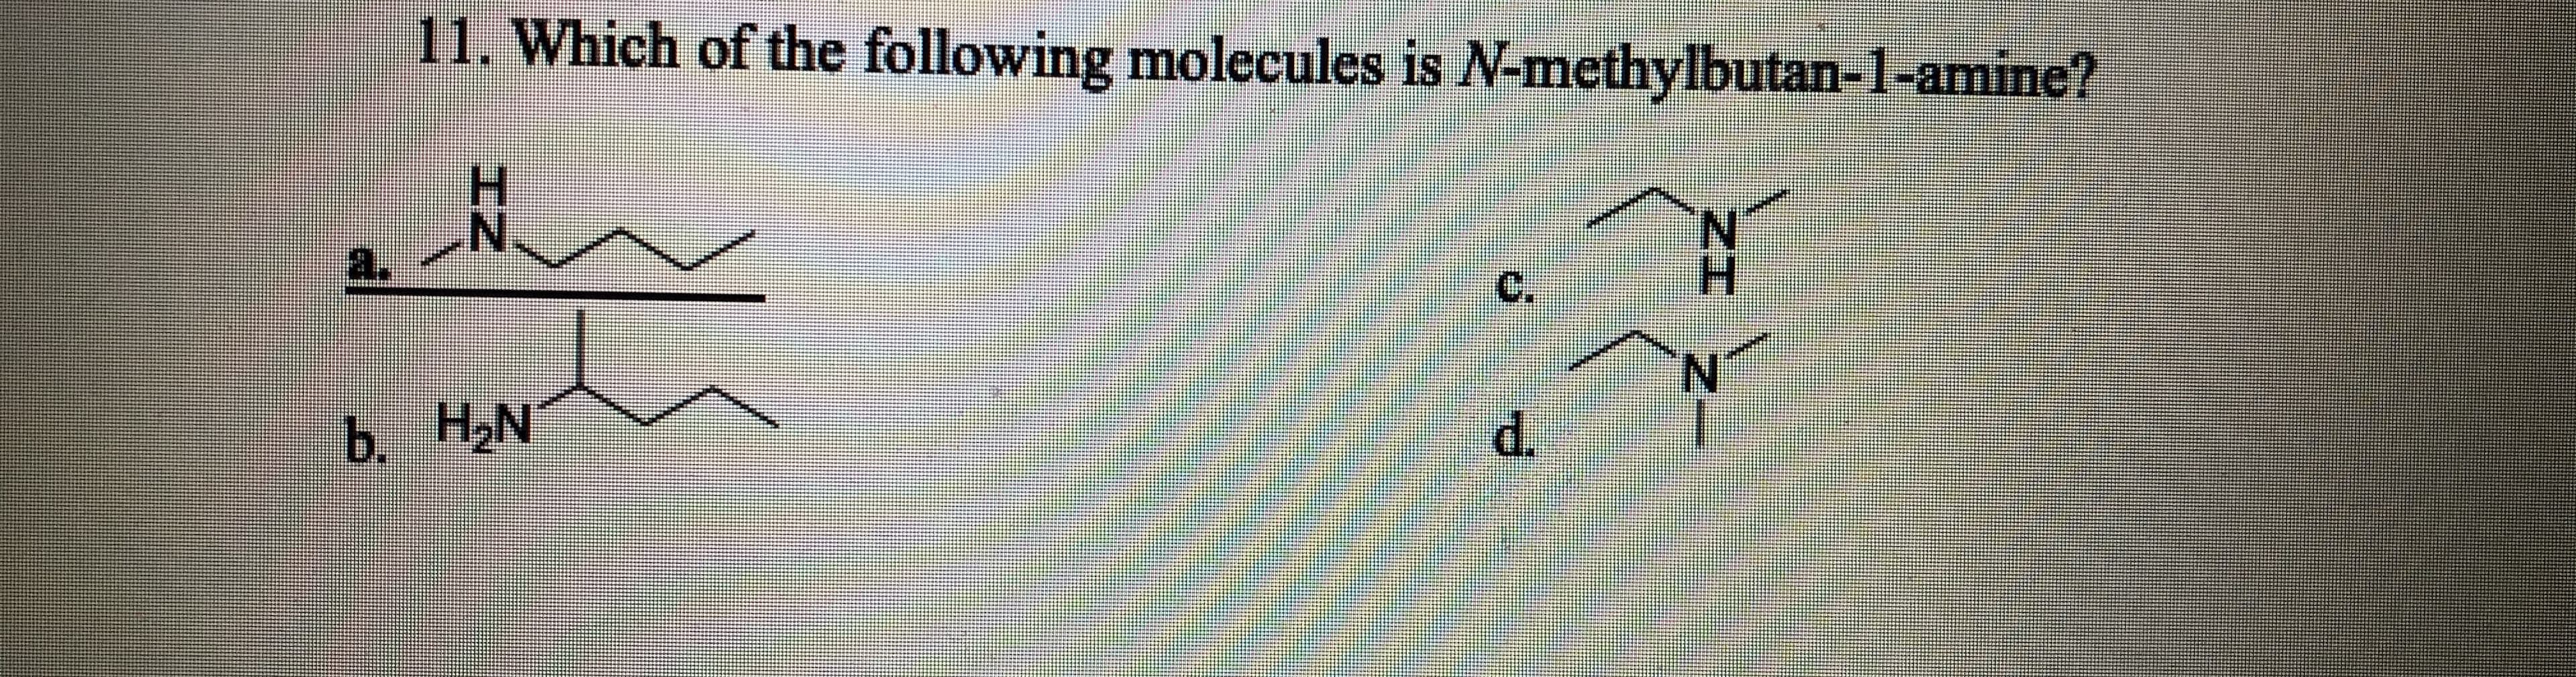 11. Which of the following molecules is N-methylbutan-1-amine?
C.
b. H.N
d.
